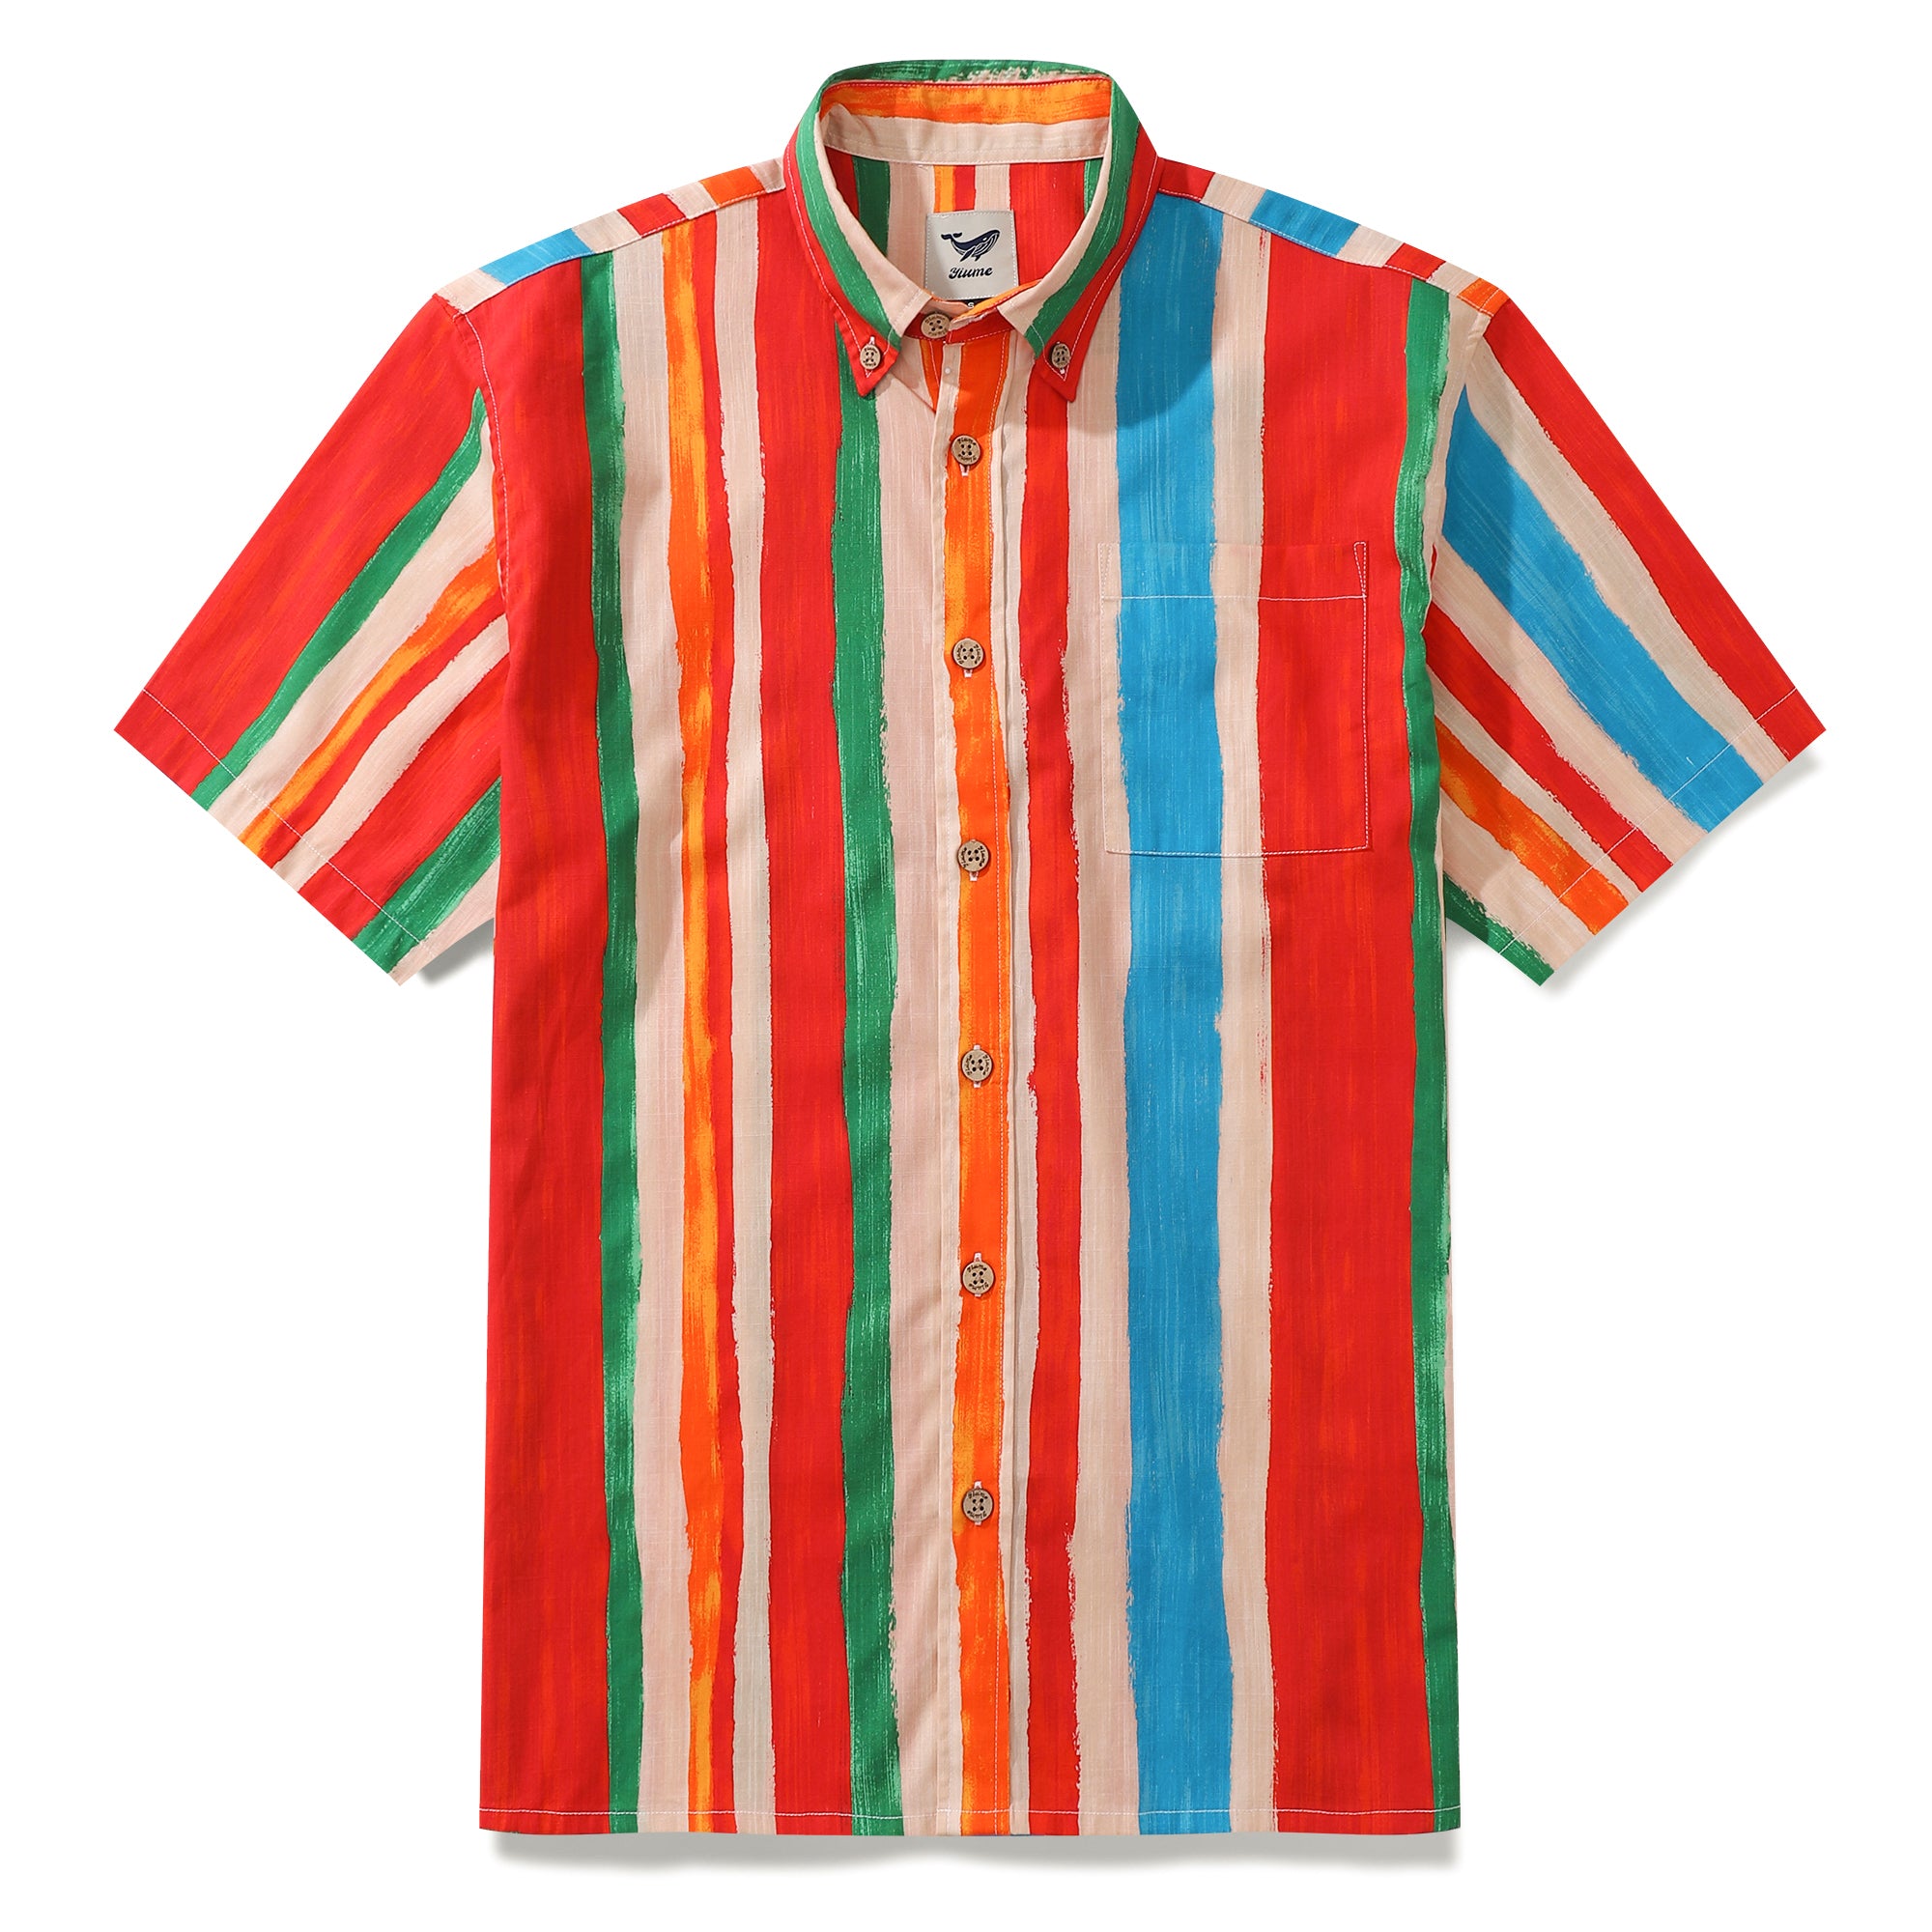 Herren-Aloha-Hemd, buntes Streifenmuster, Baumwolle, kurze Ärmel, Knopfleiste